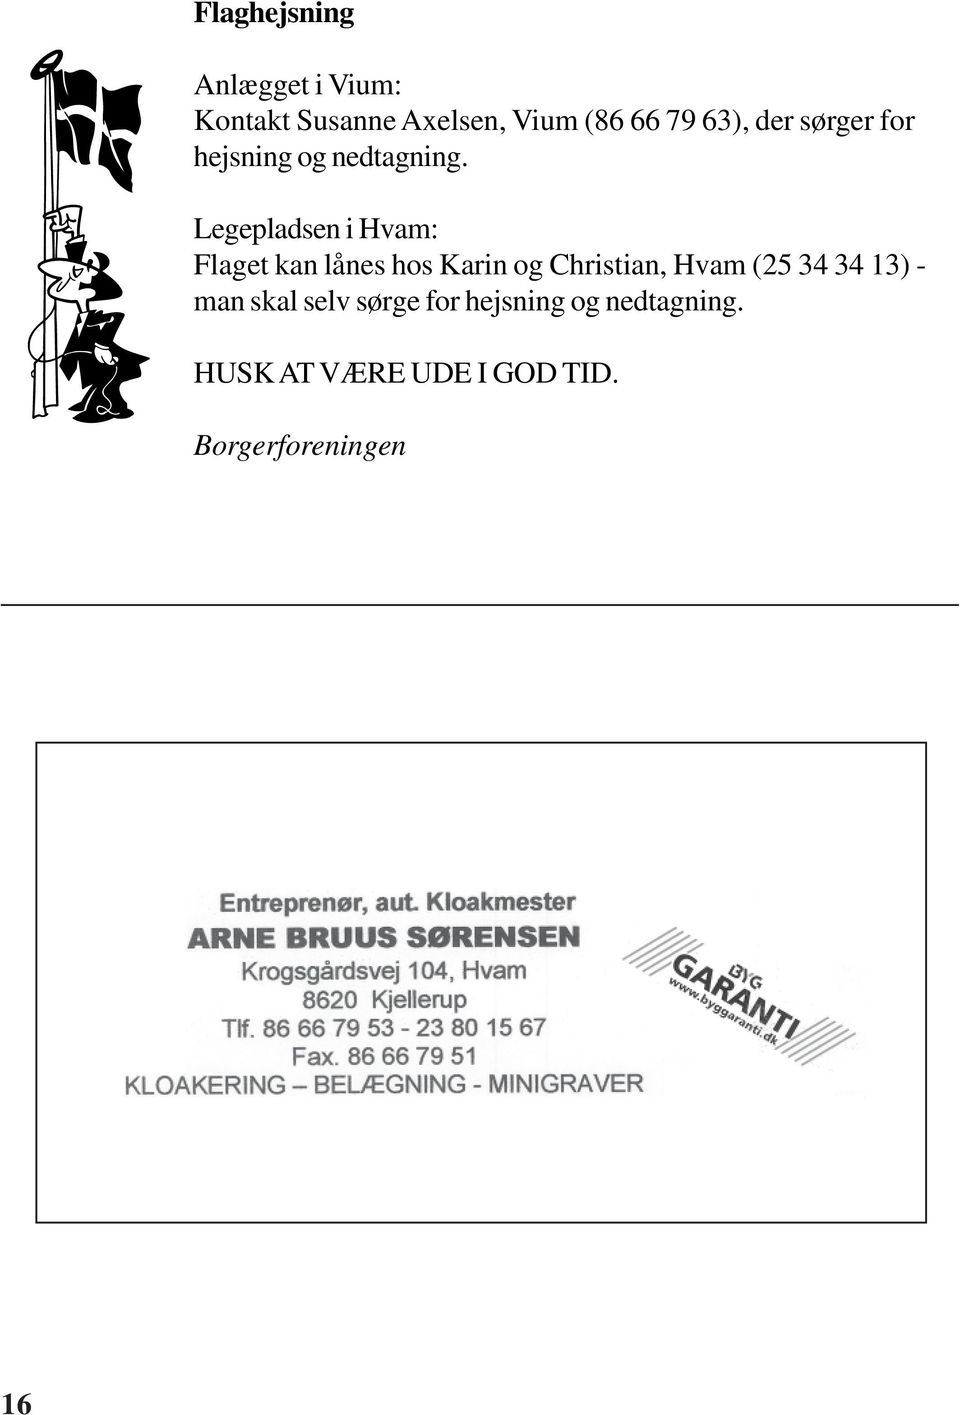 Legepladsen i Hvam: Flaget kan lånes hos Karin og Christian, Hvam (25 34